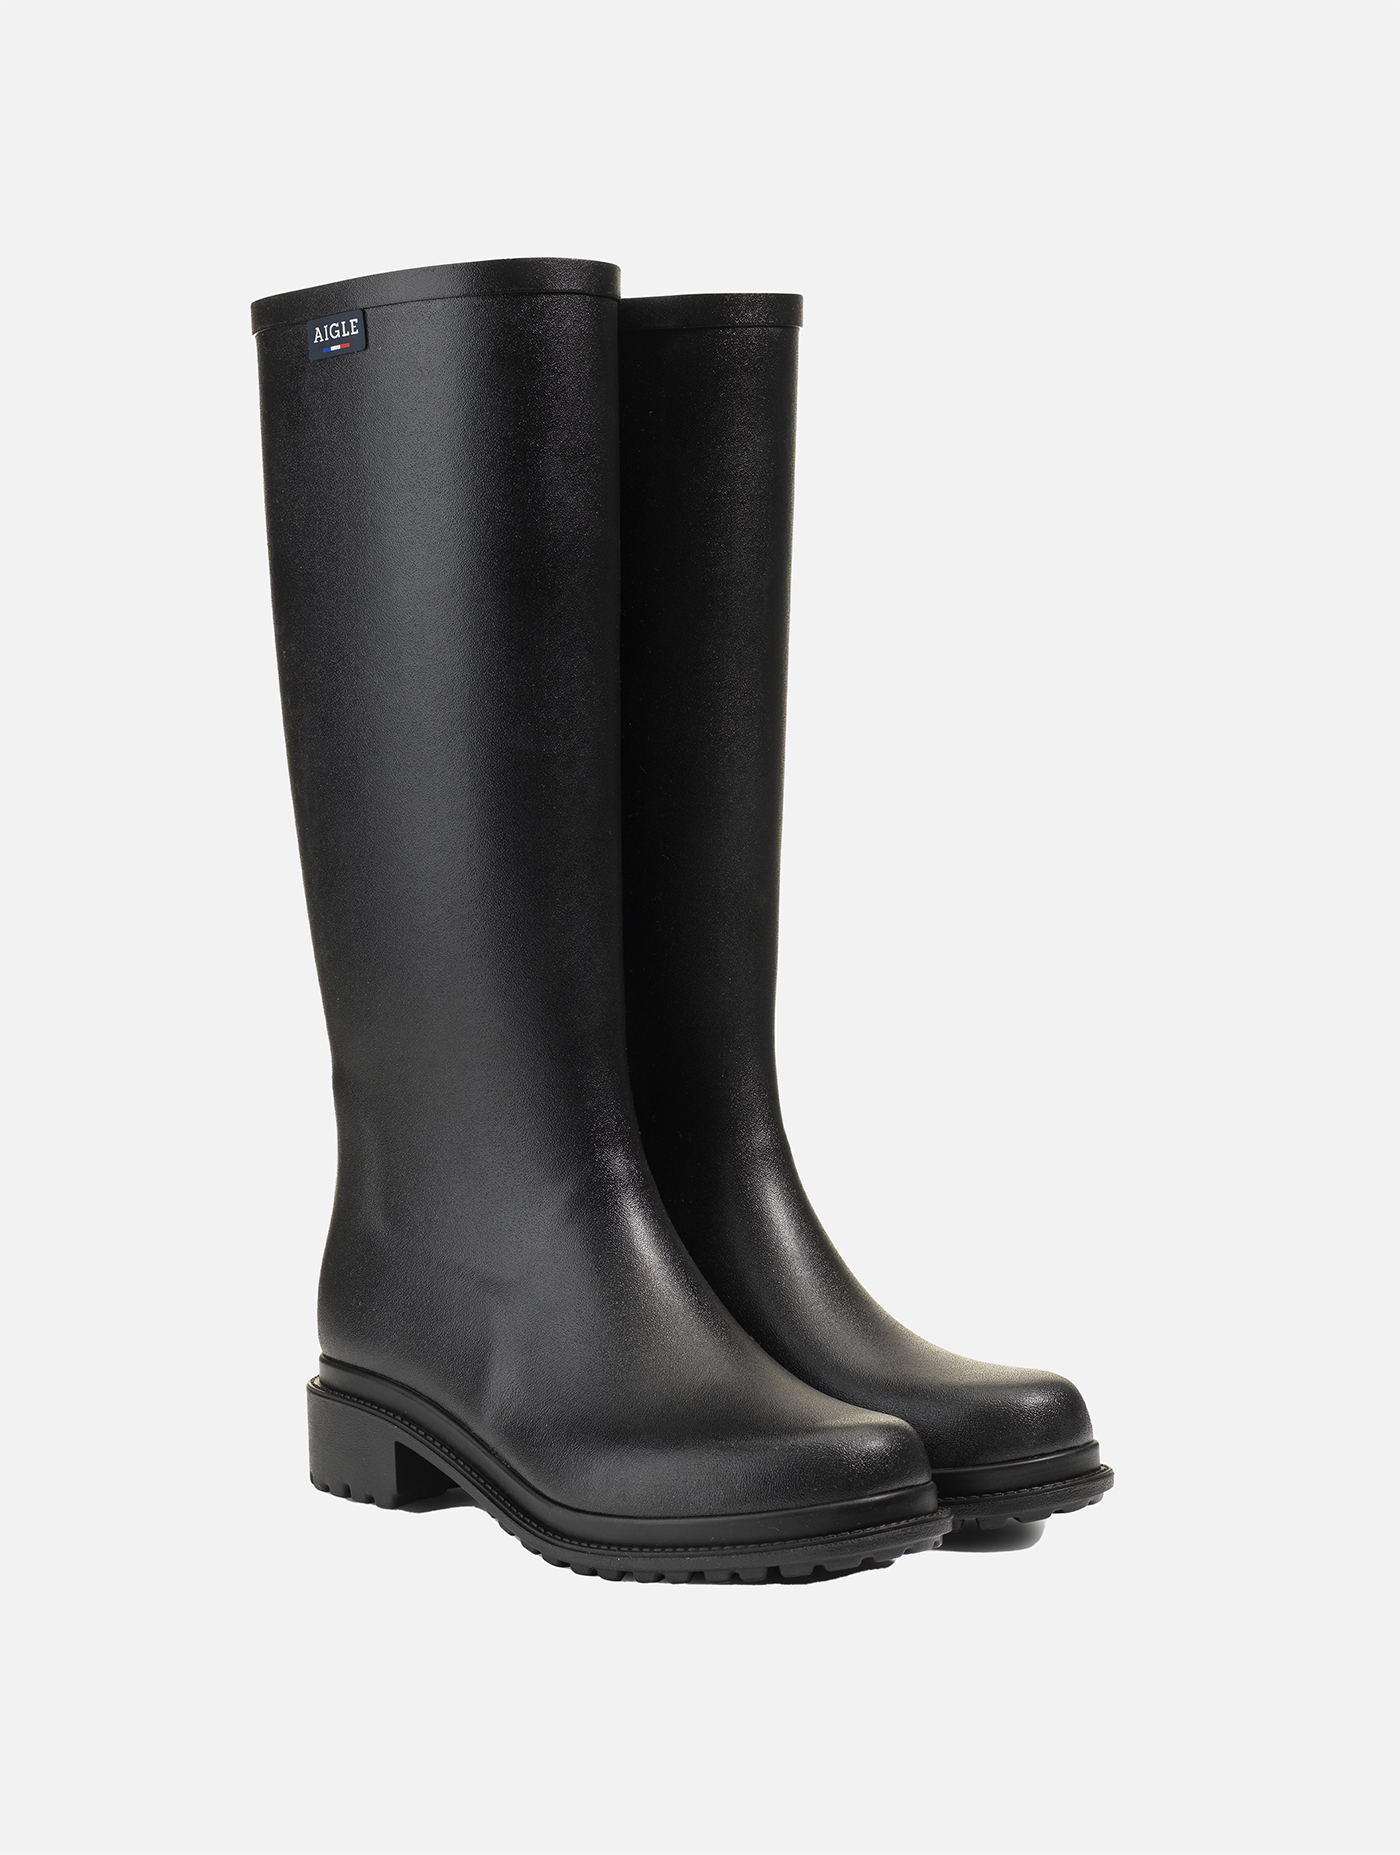 Urban rain boot, made in France.women | AIGLE